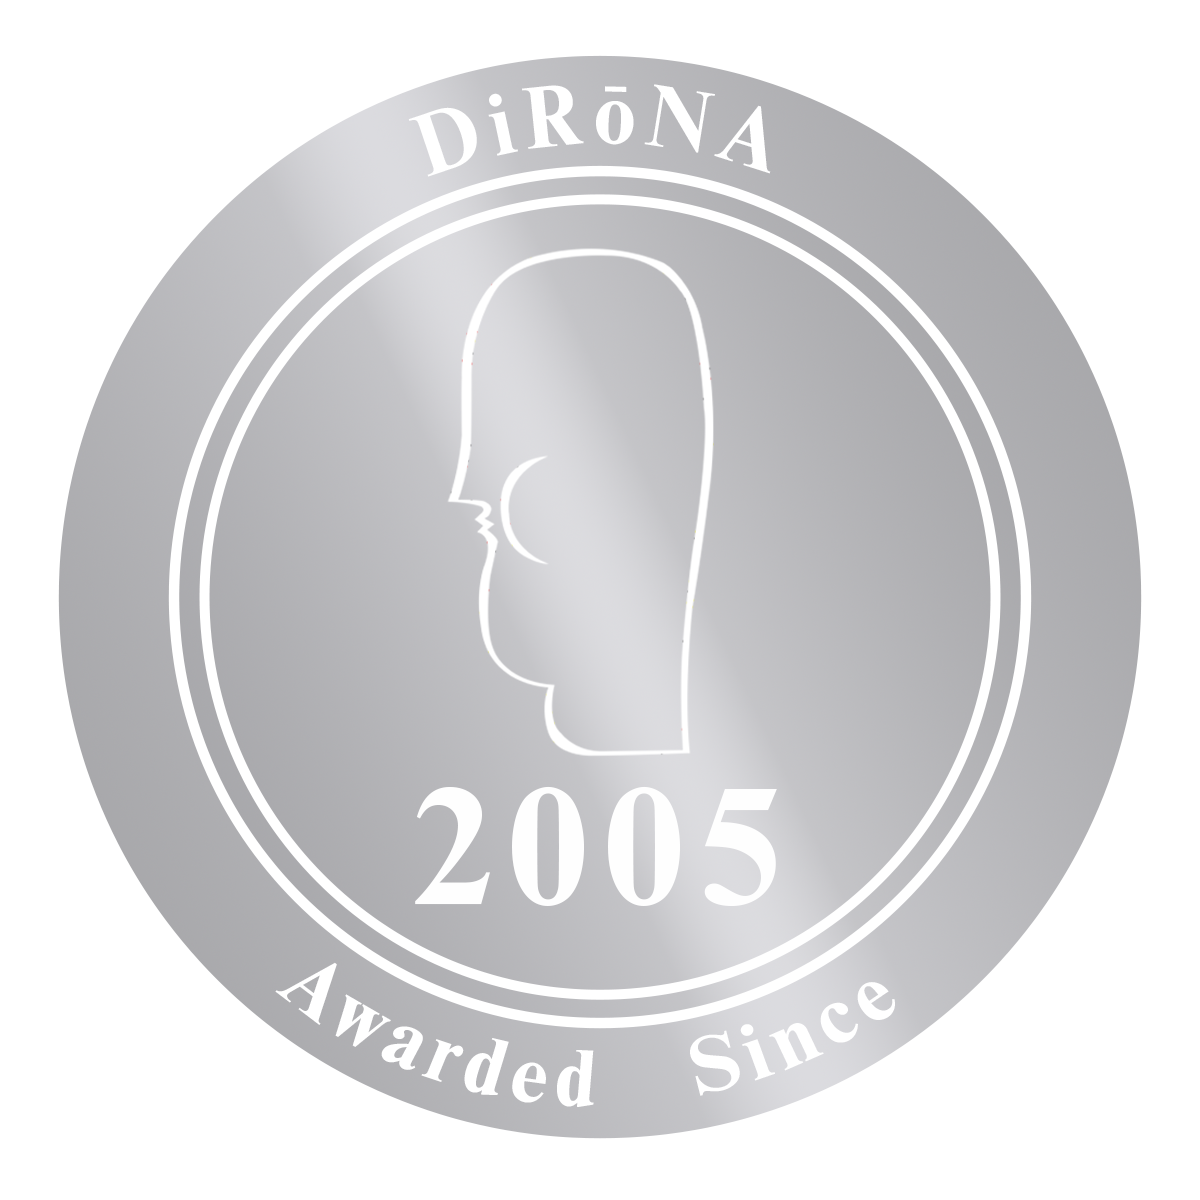 DiRoNA Awarded Restaurant Distinguished Restaurants of North America Since 2005 Badge